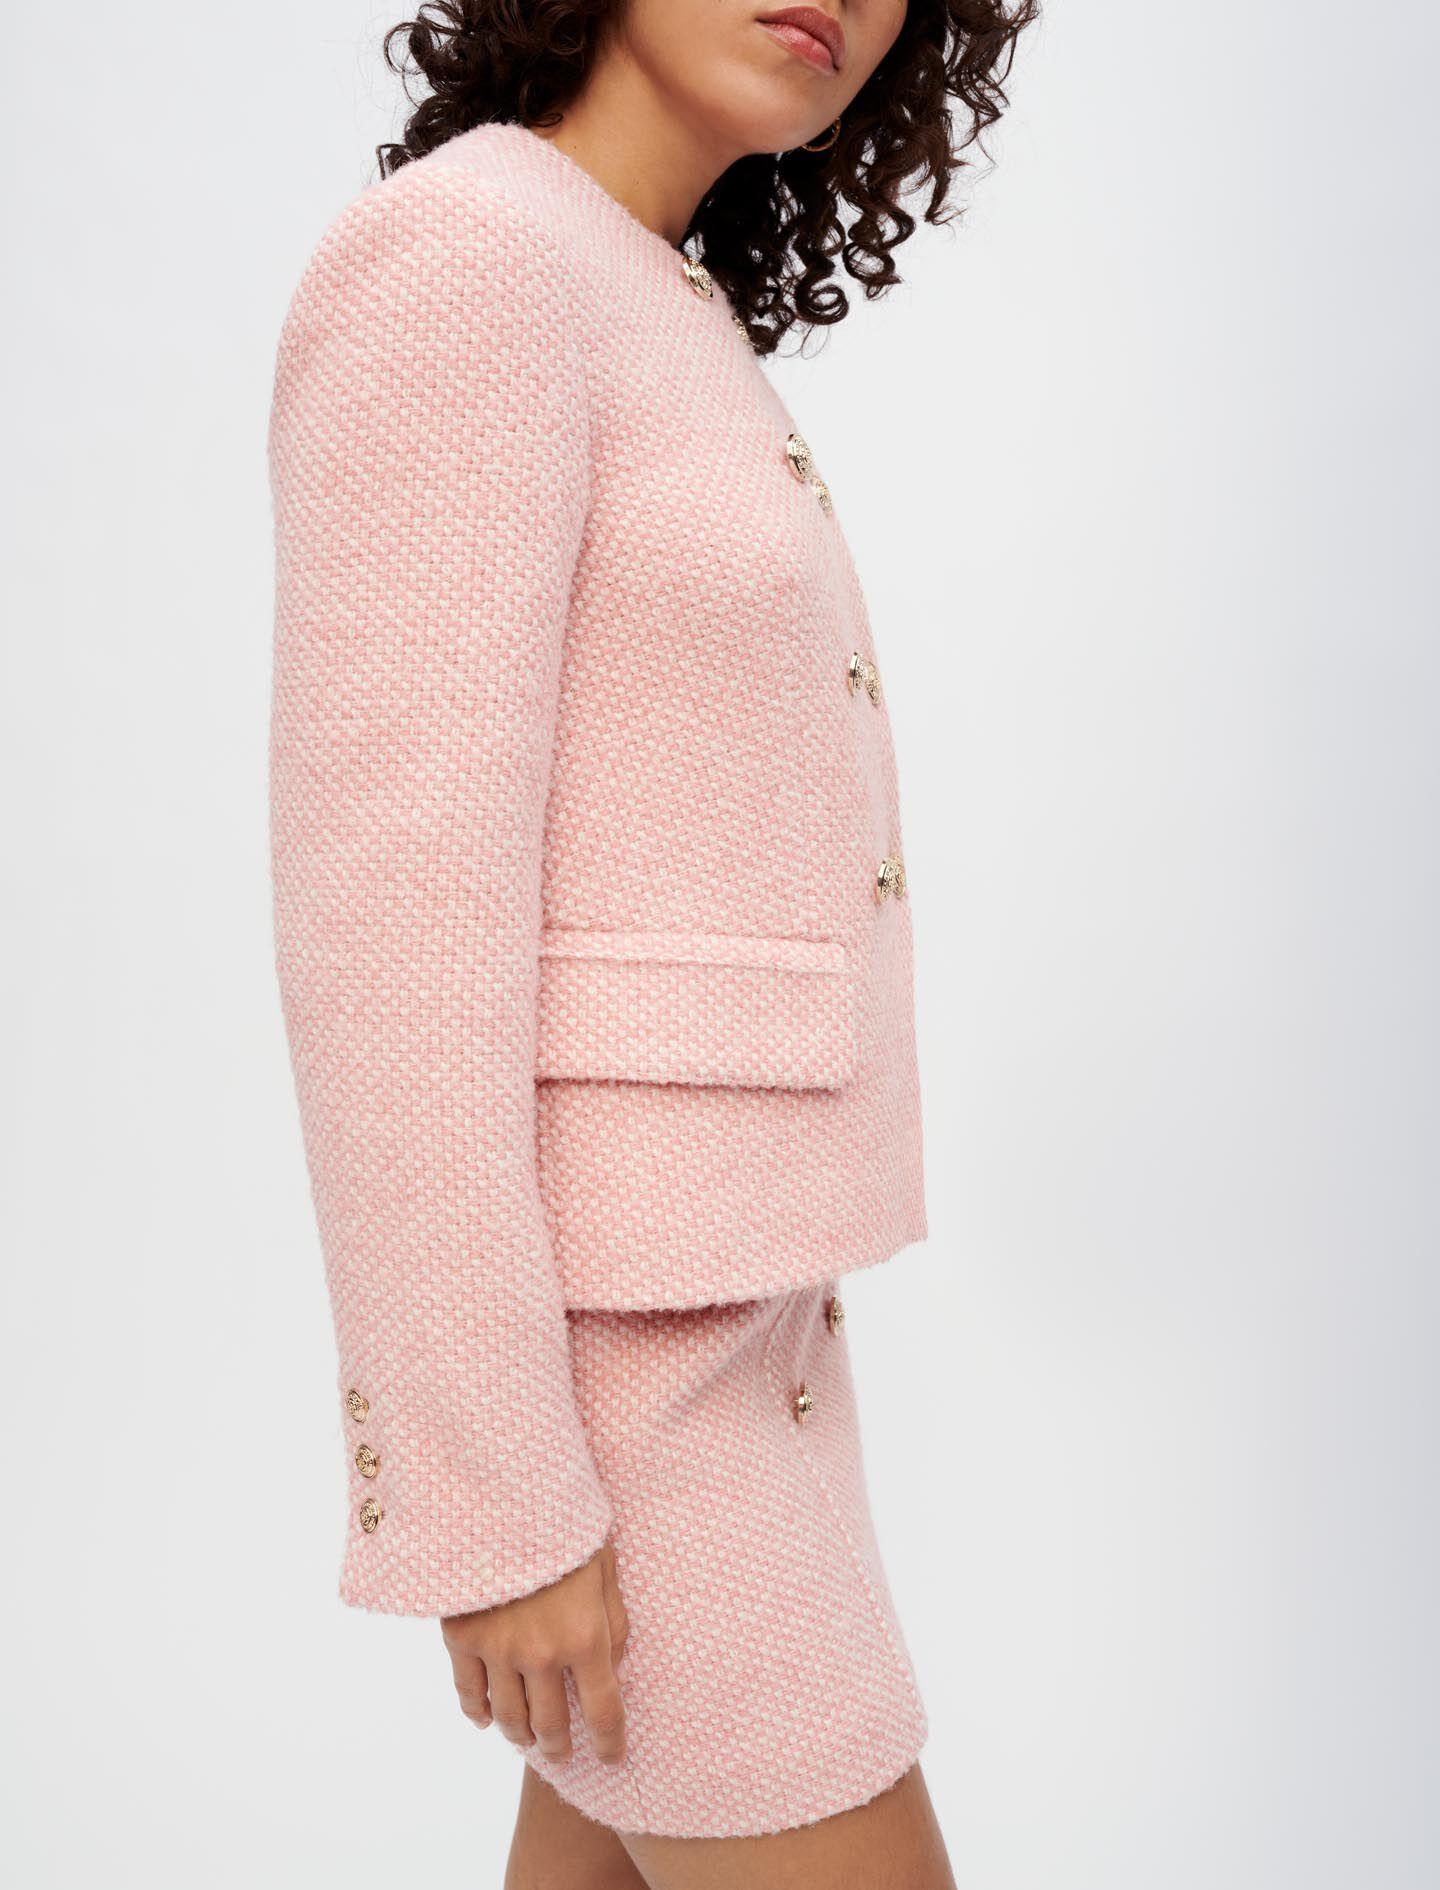 Maje Pink And Ecru Marl Tweed Jacket | Lyst